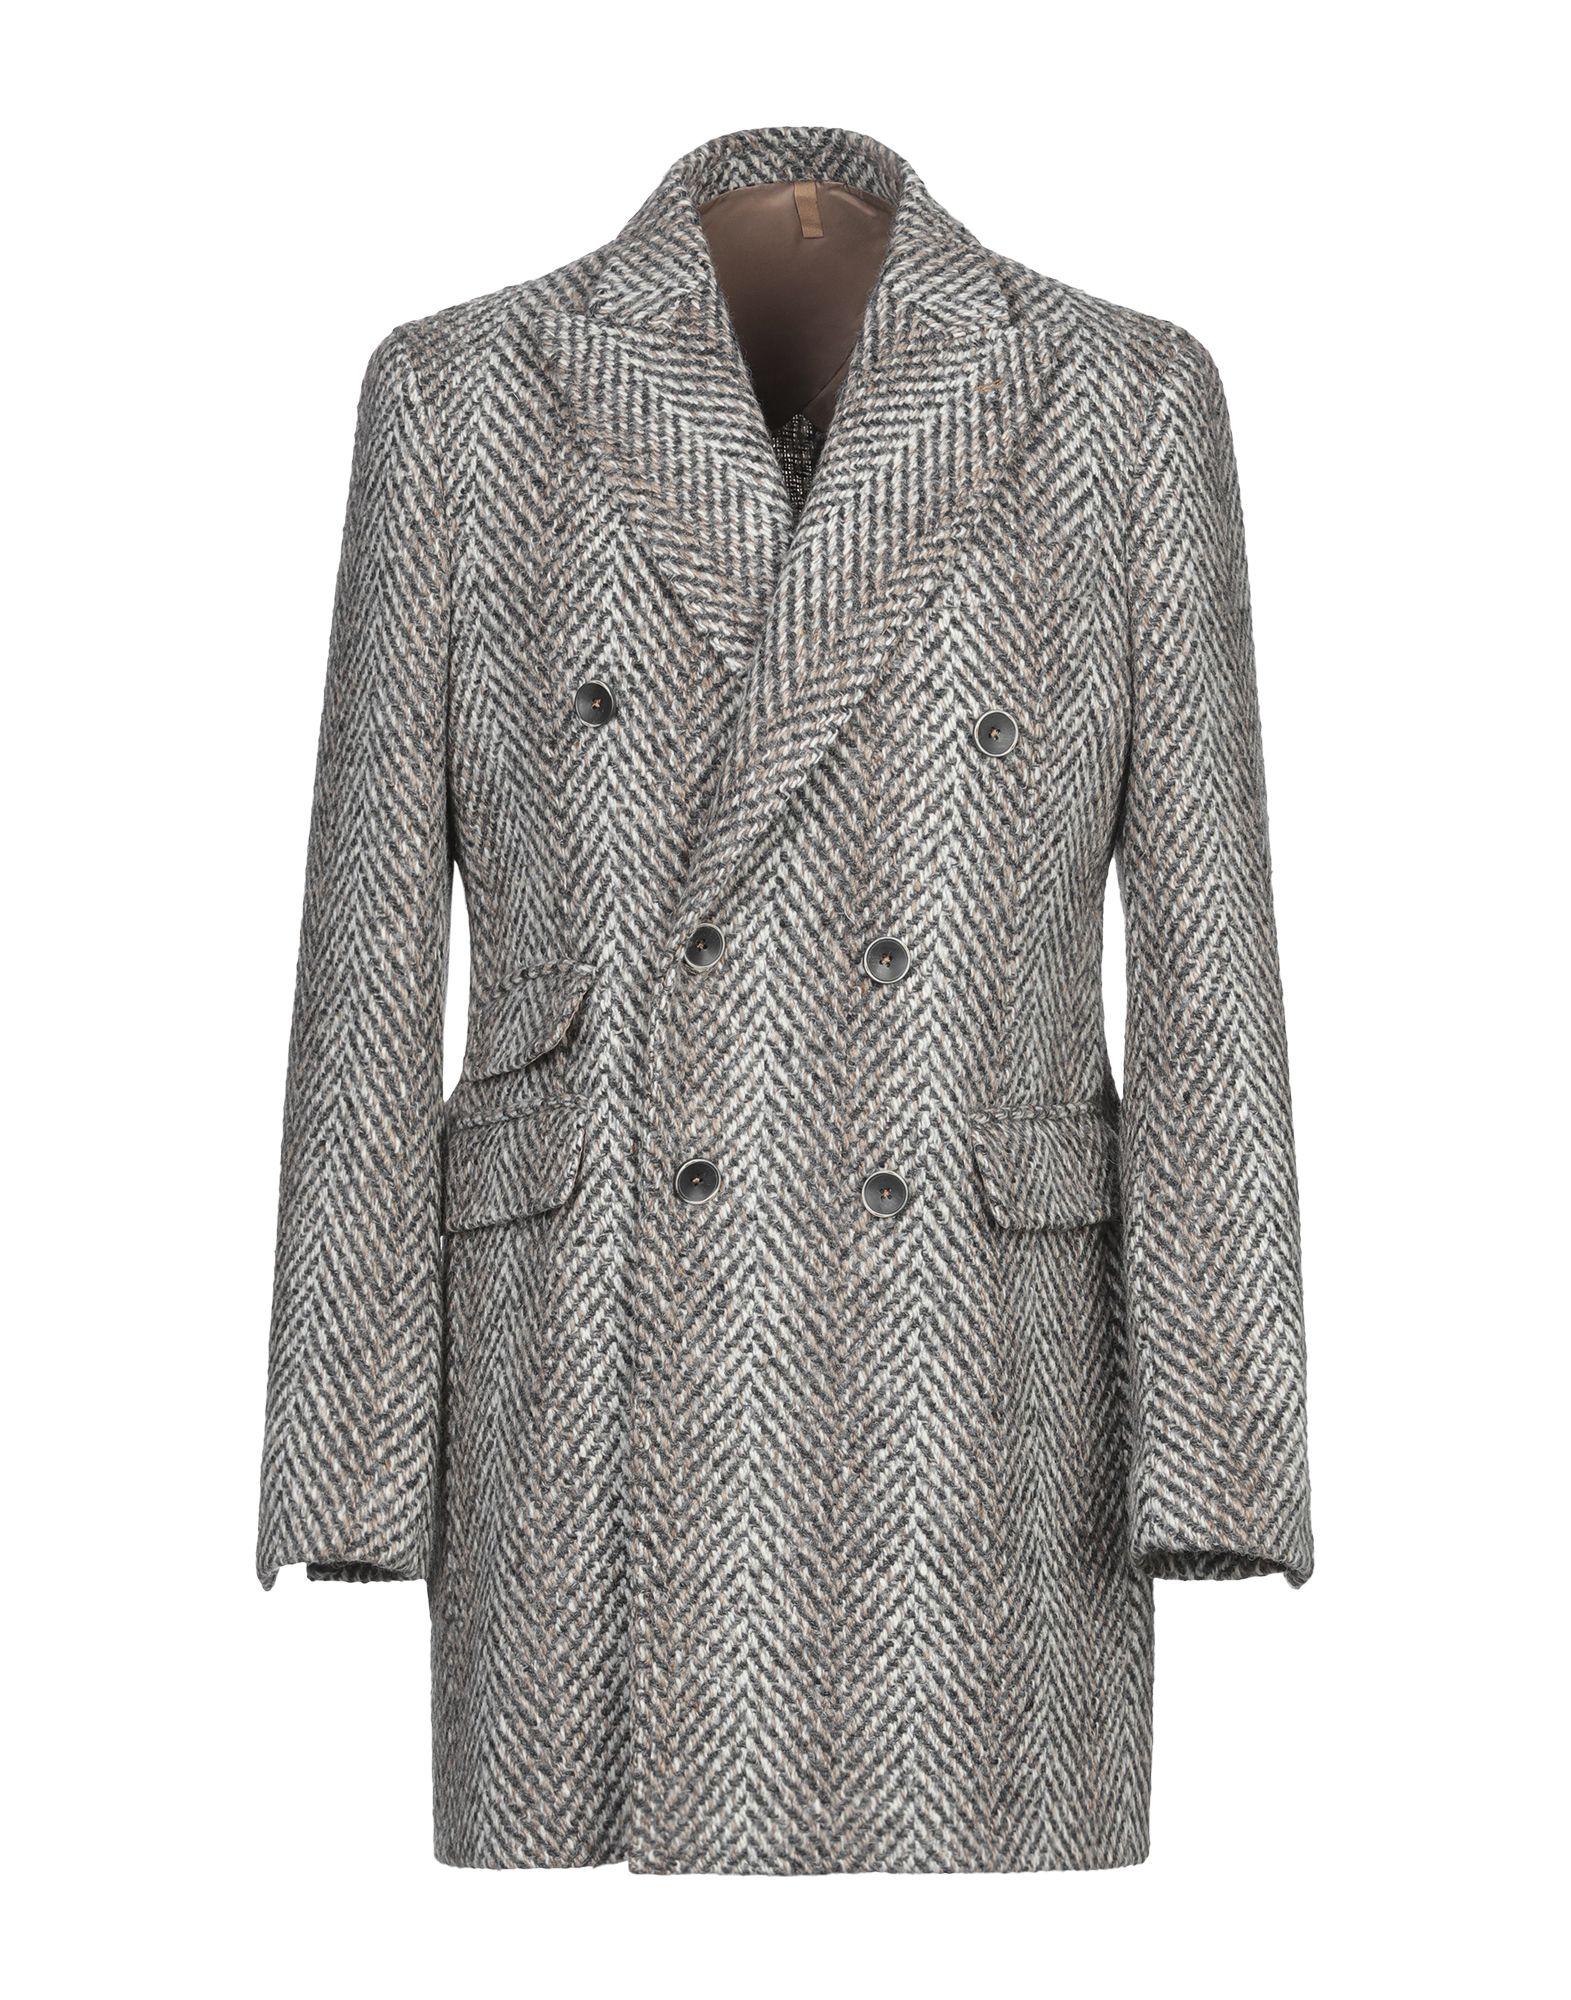 Domenico Tagliente Tweed Coat in Lead (Gray) for Men - Lyst